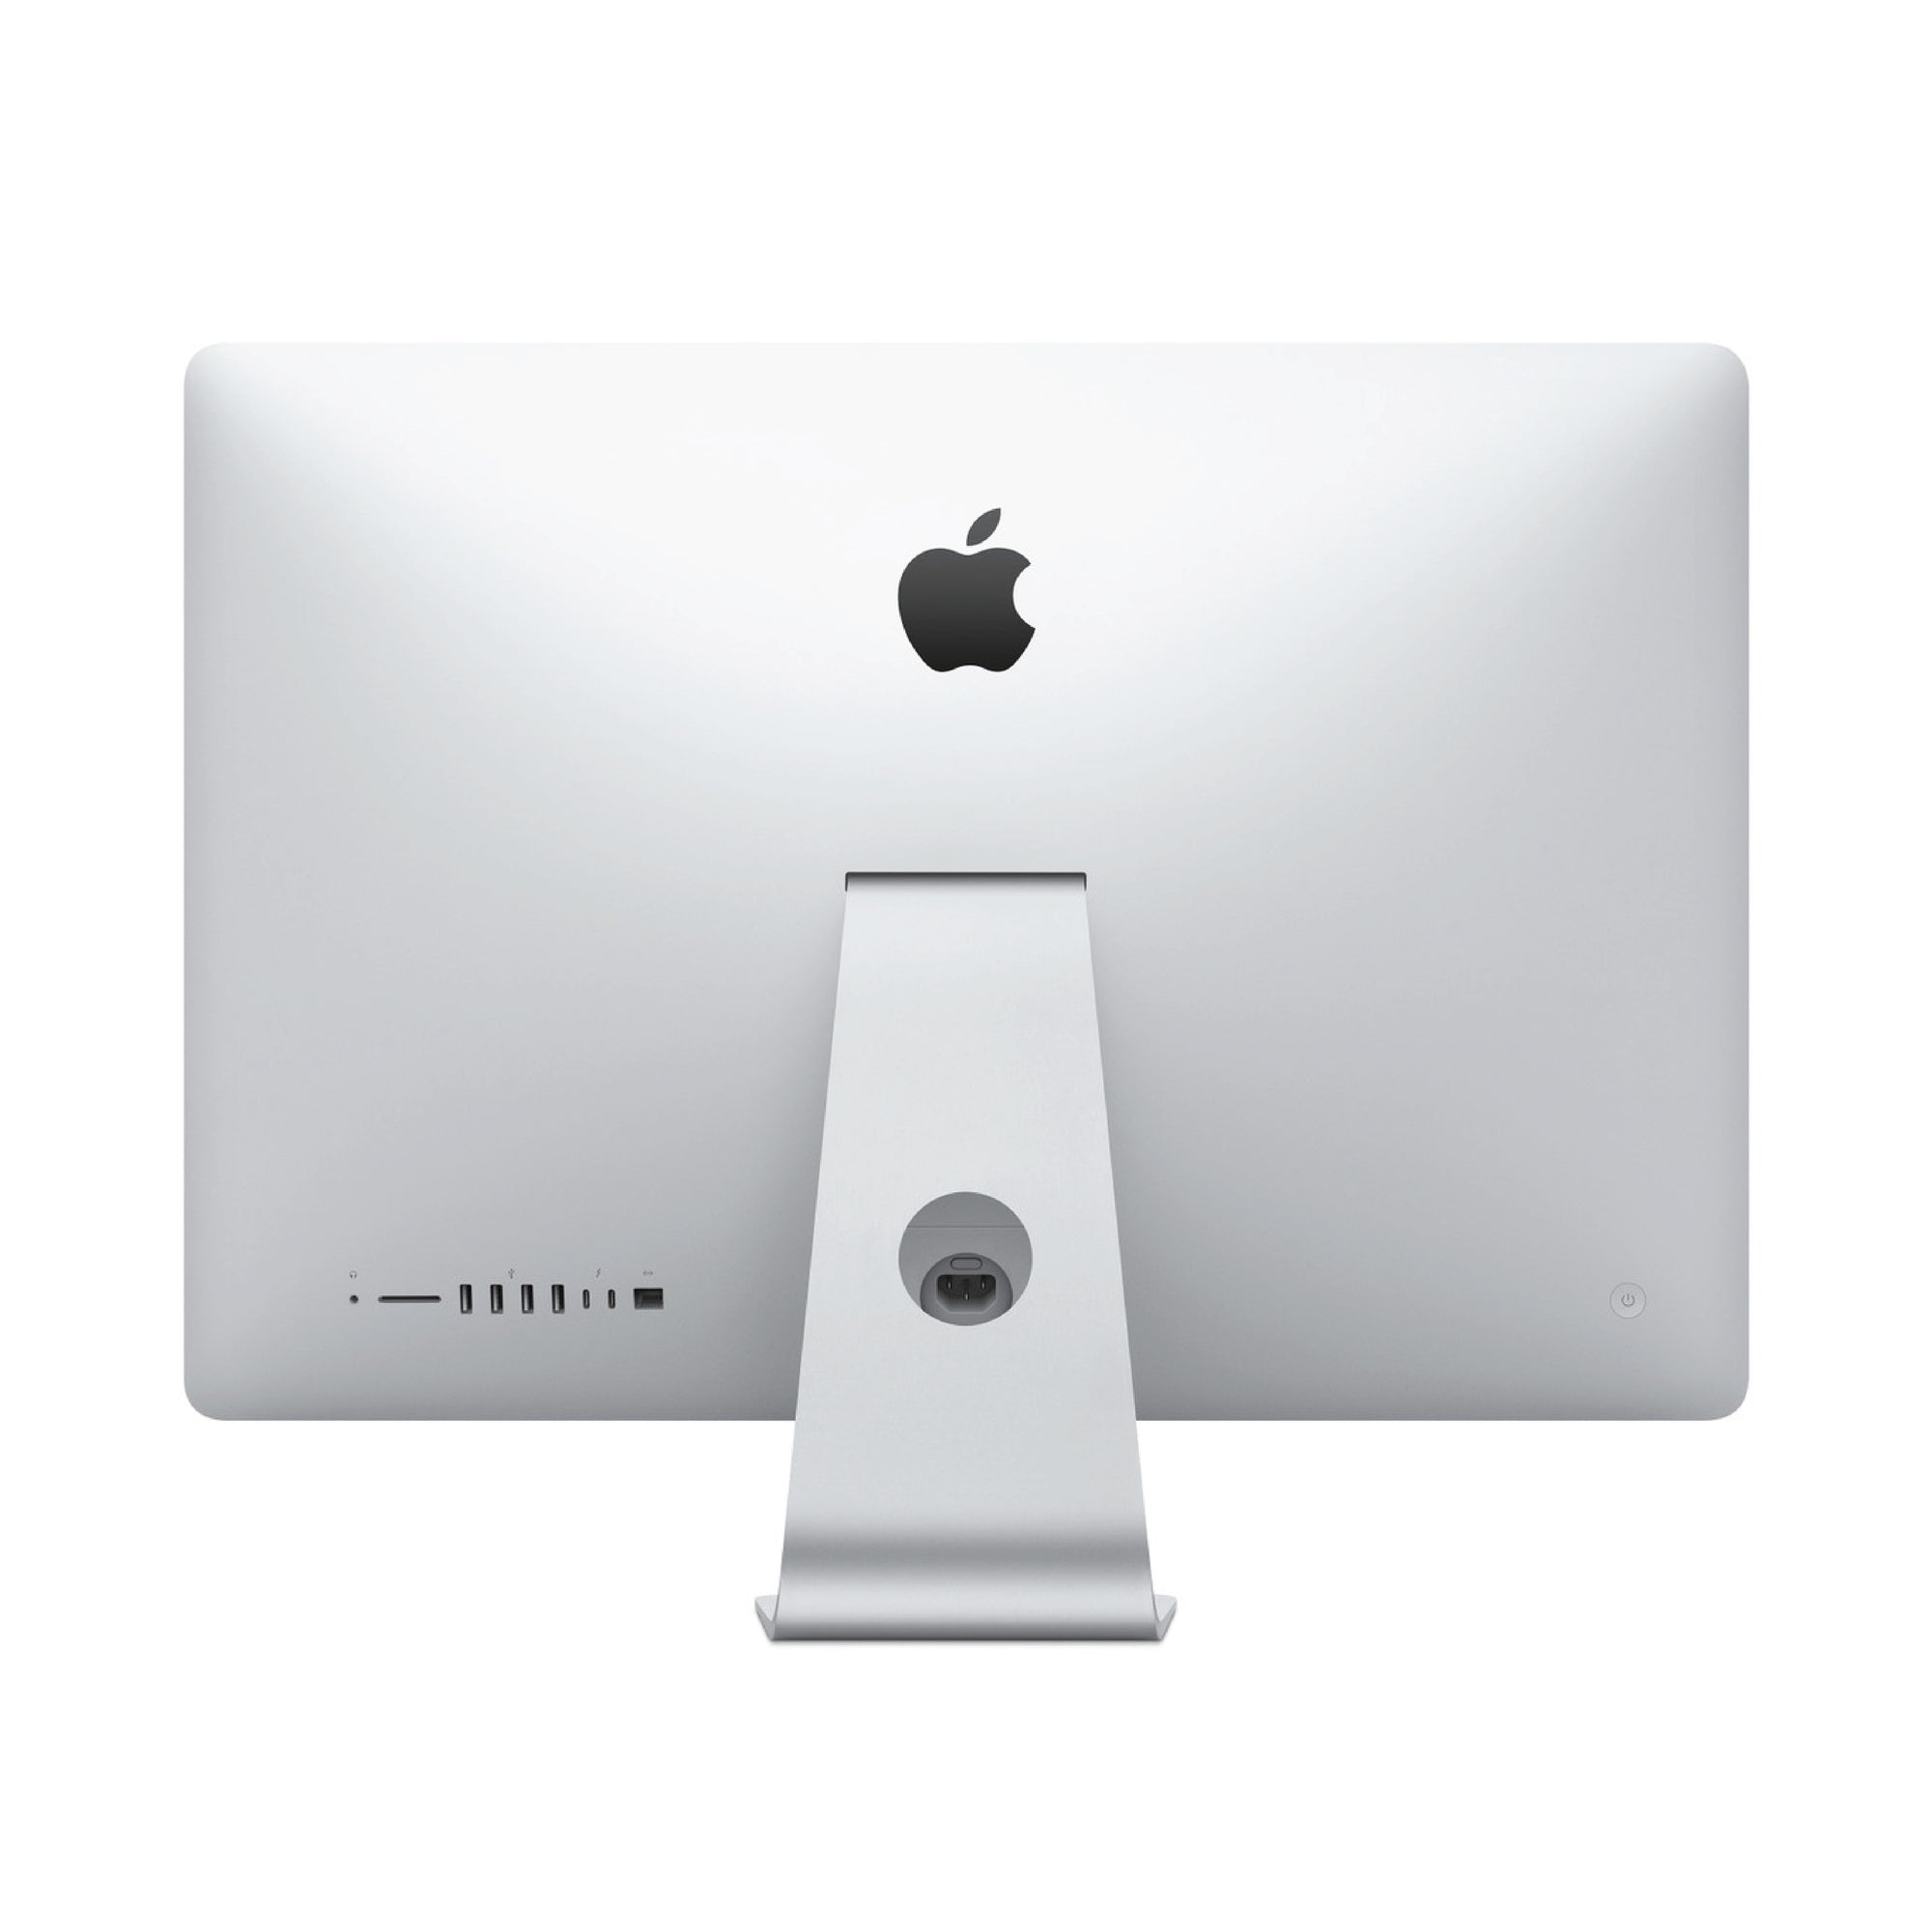 iMac Data Wipe New OSx Install